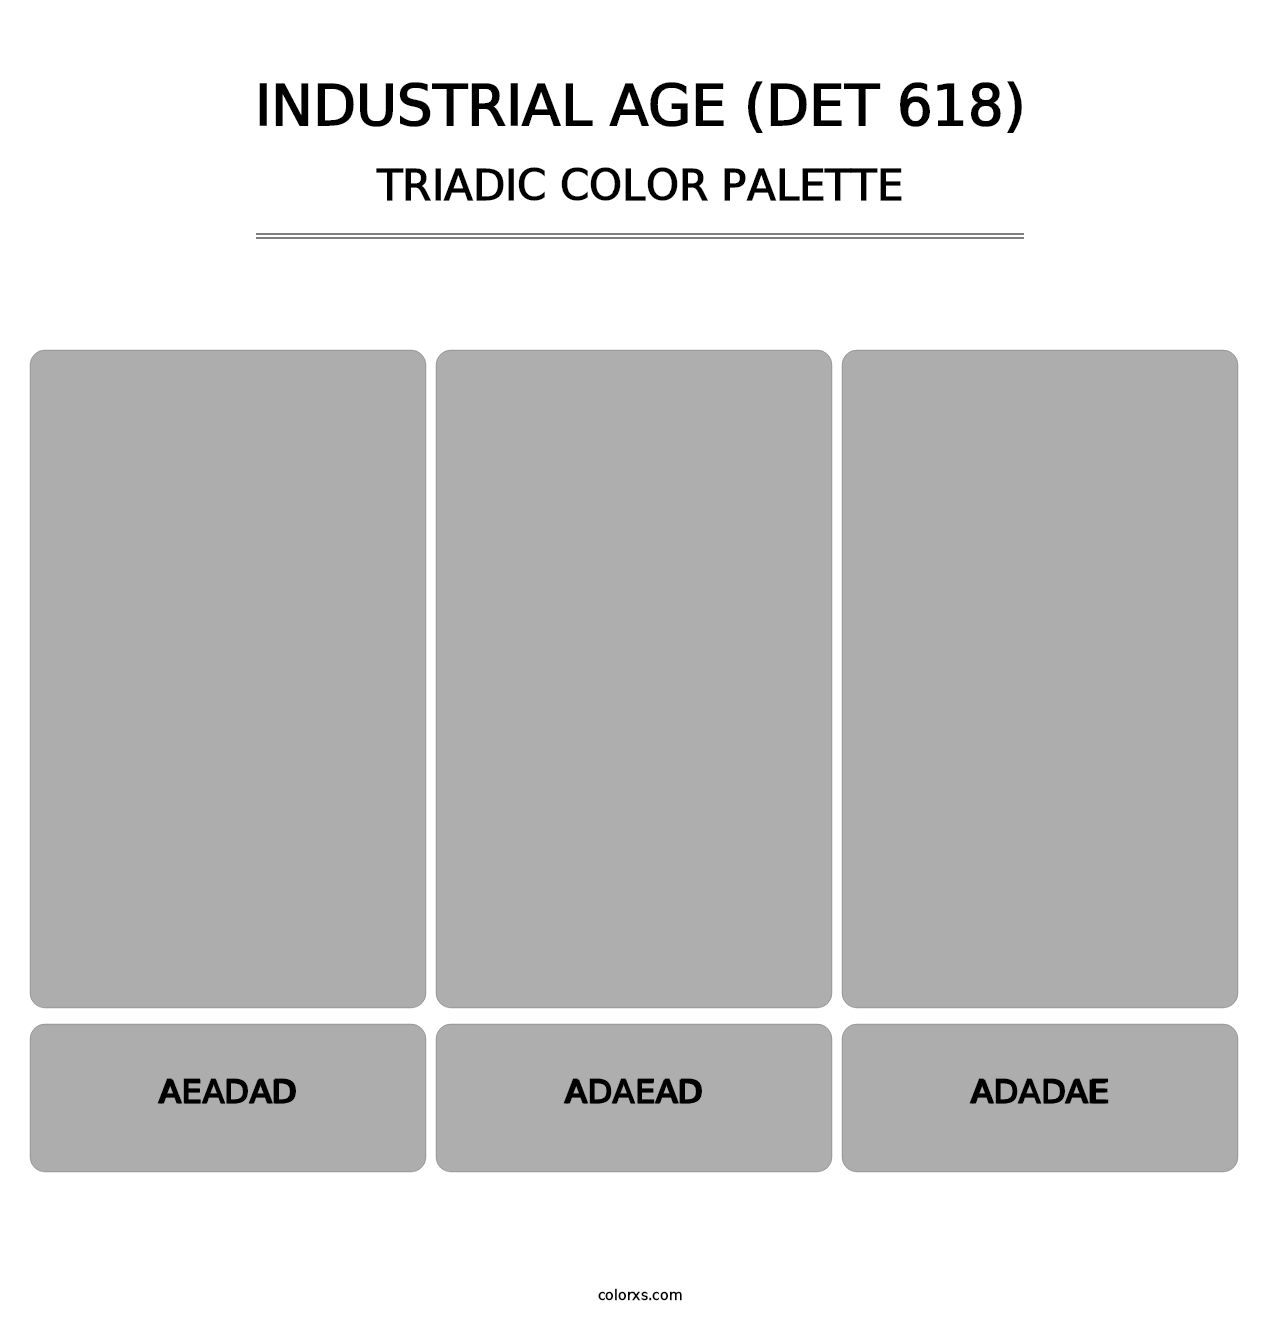 Industrial Age (DET 618) - Triadic Color Palette